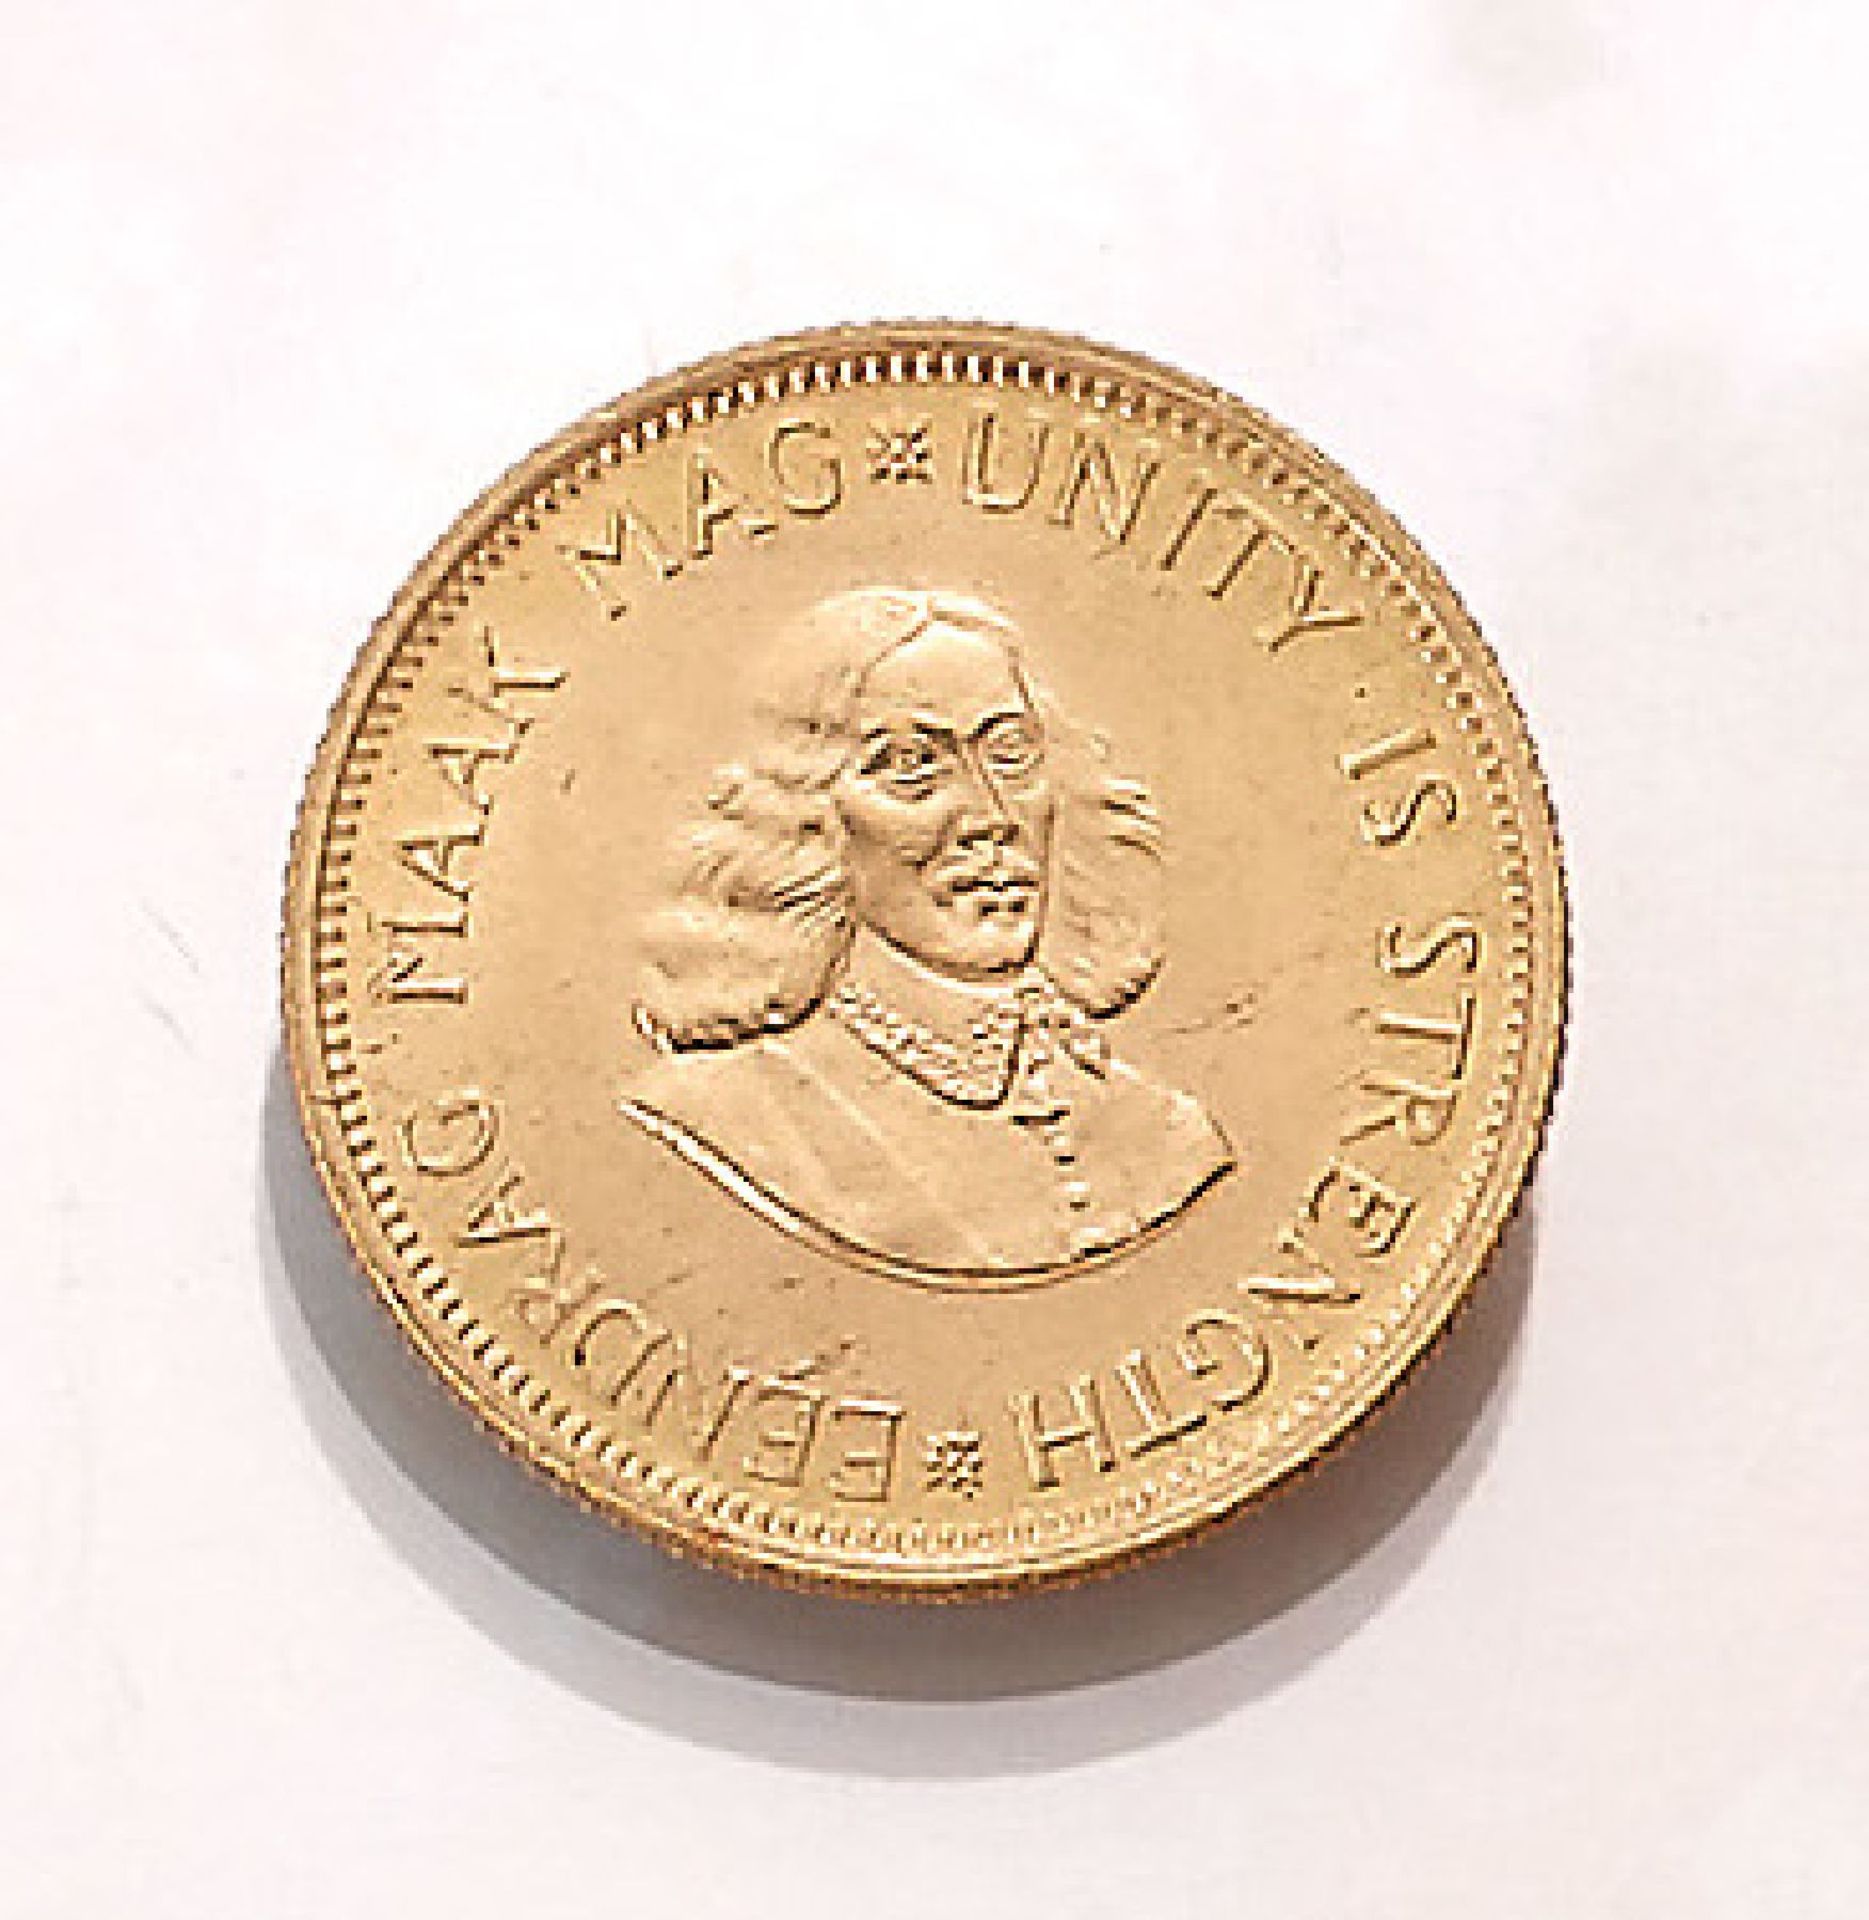 Gold coin, 2 Rand, South Africa, 1966, springbok, Eendrag Maak Mag, Unity is strength